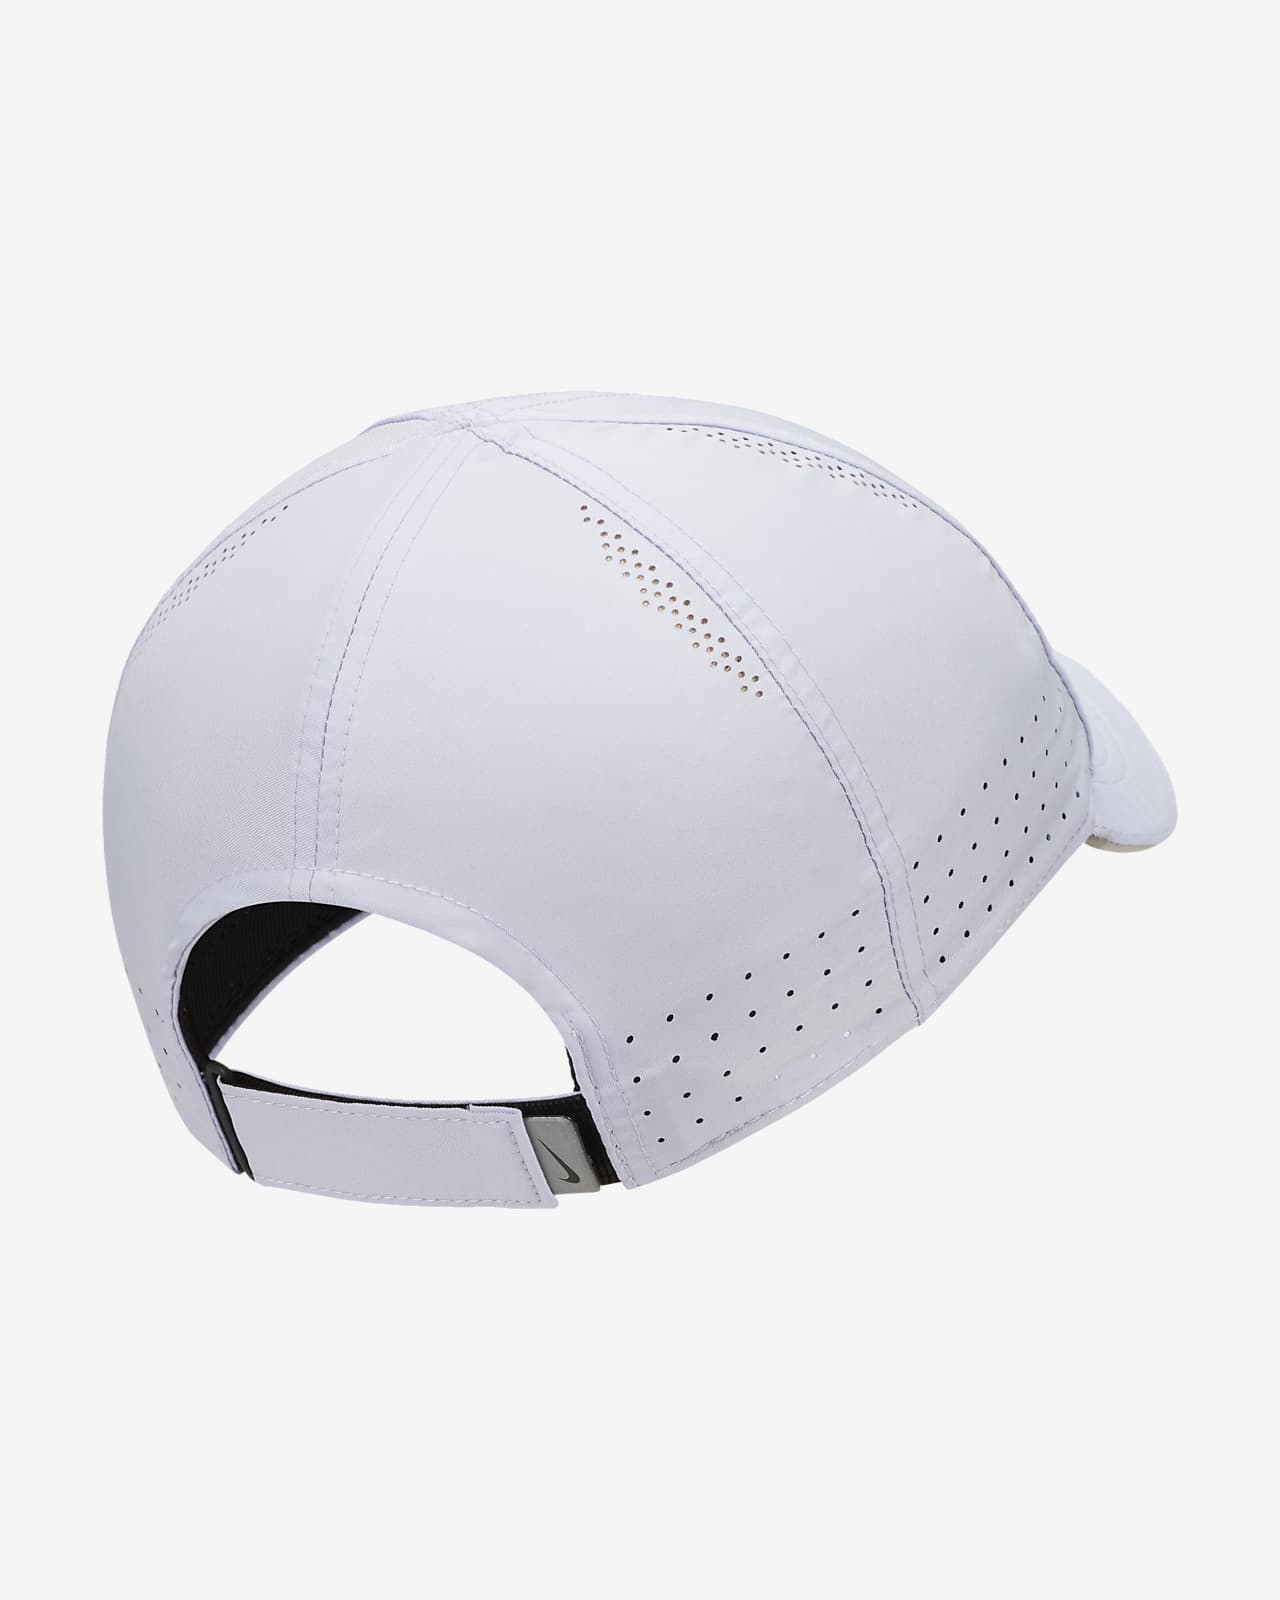 Nike Women's Featherlight Cap, White